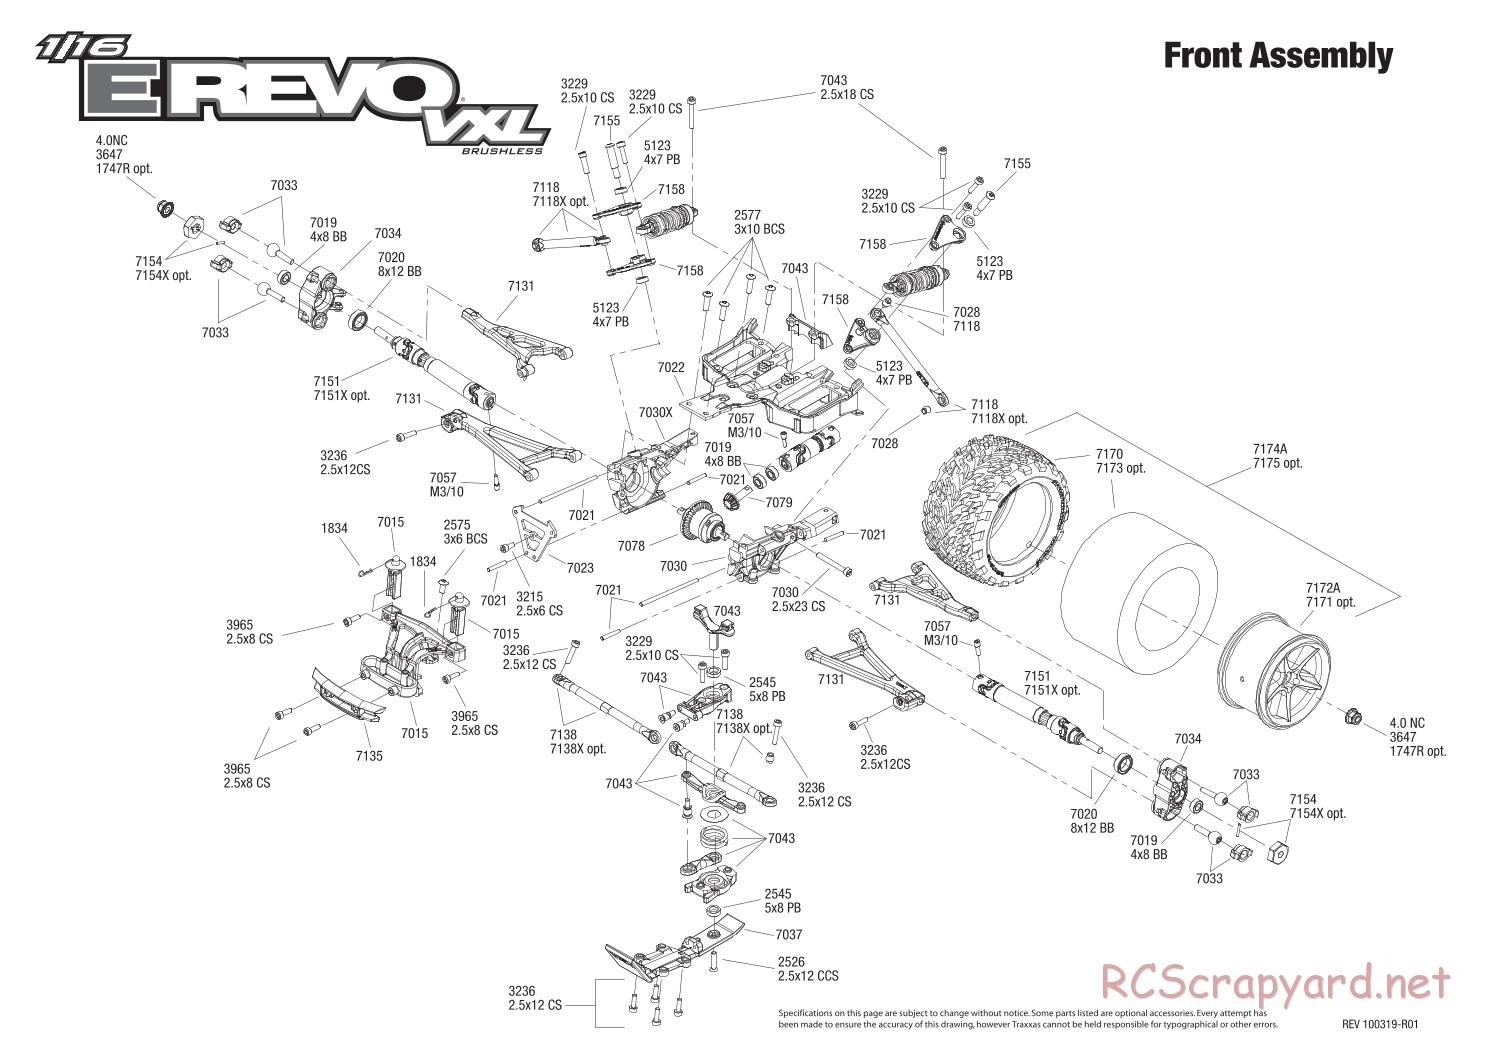 Traxxas - 1/16 E-Revo VXL (2010) - Exploded Views - Page 2